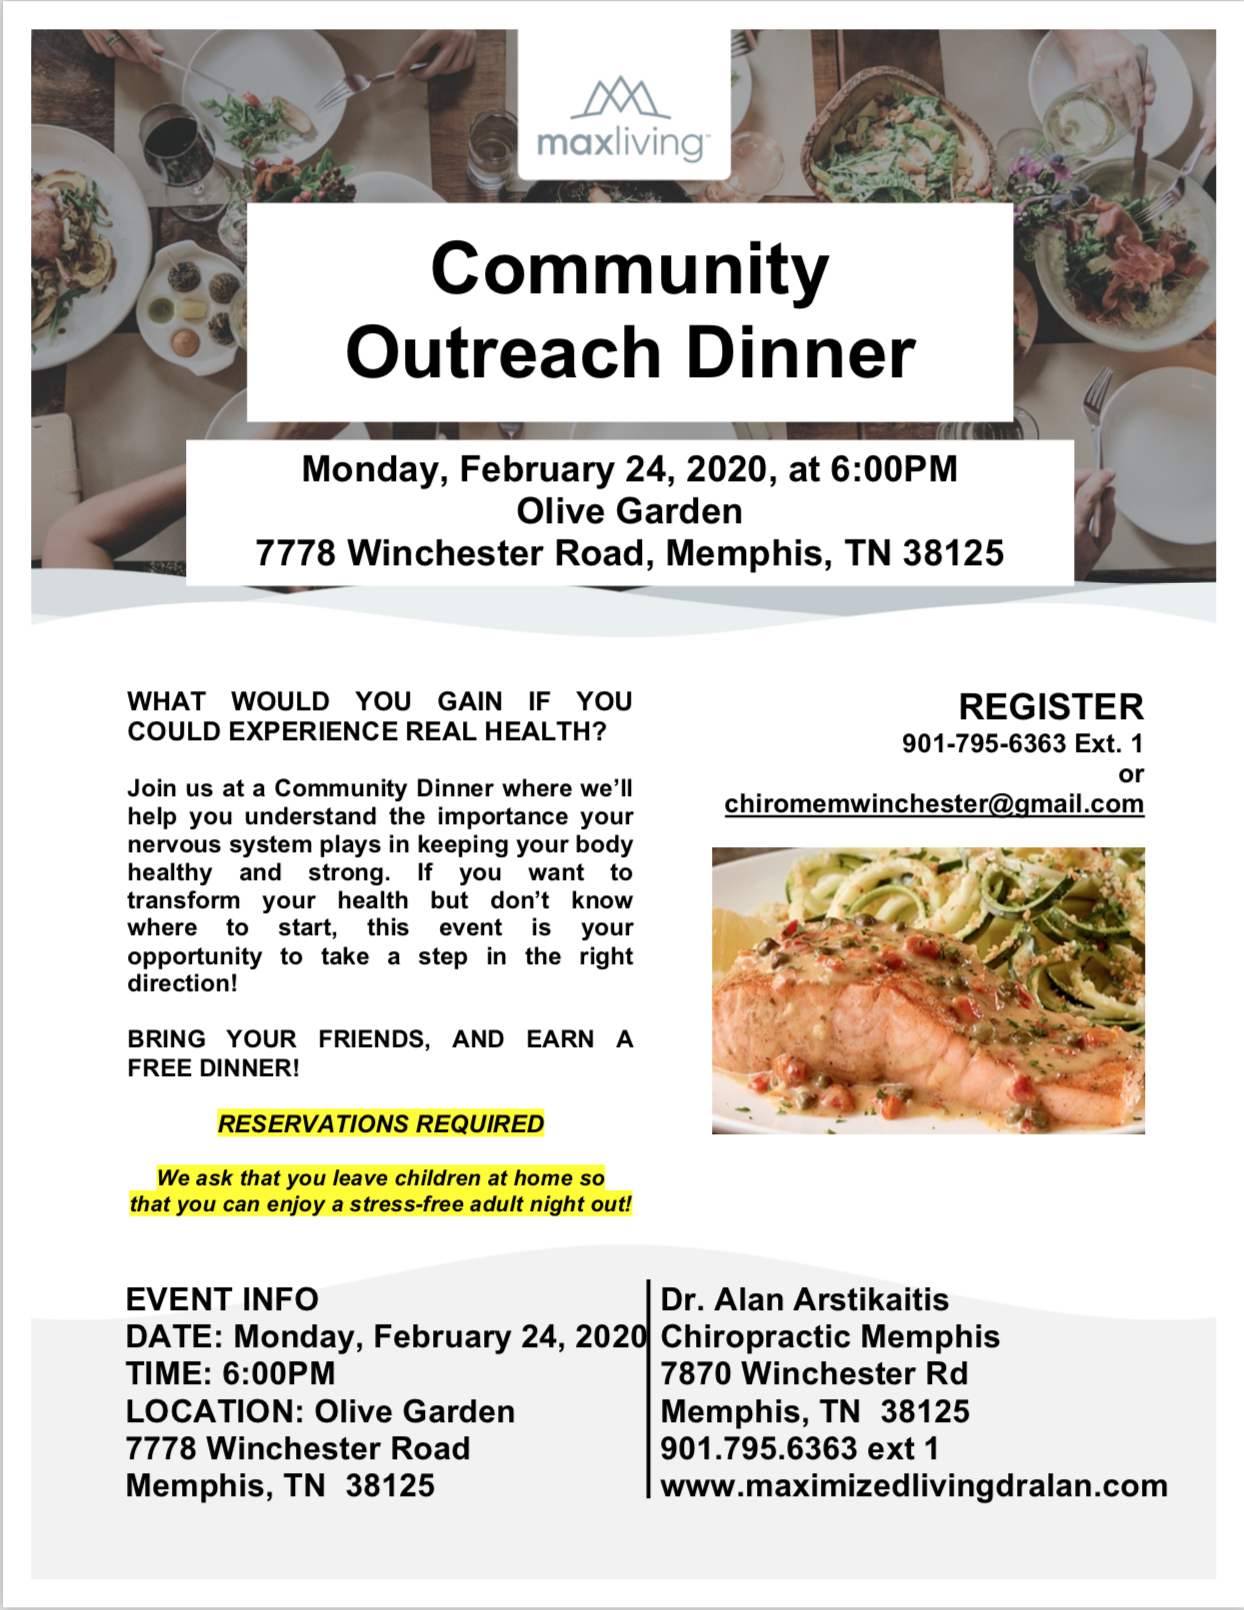 Community Outreach Dinner 25 Feb 2020